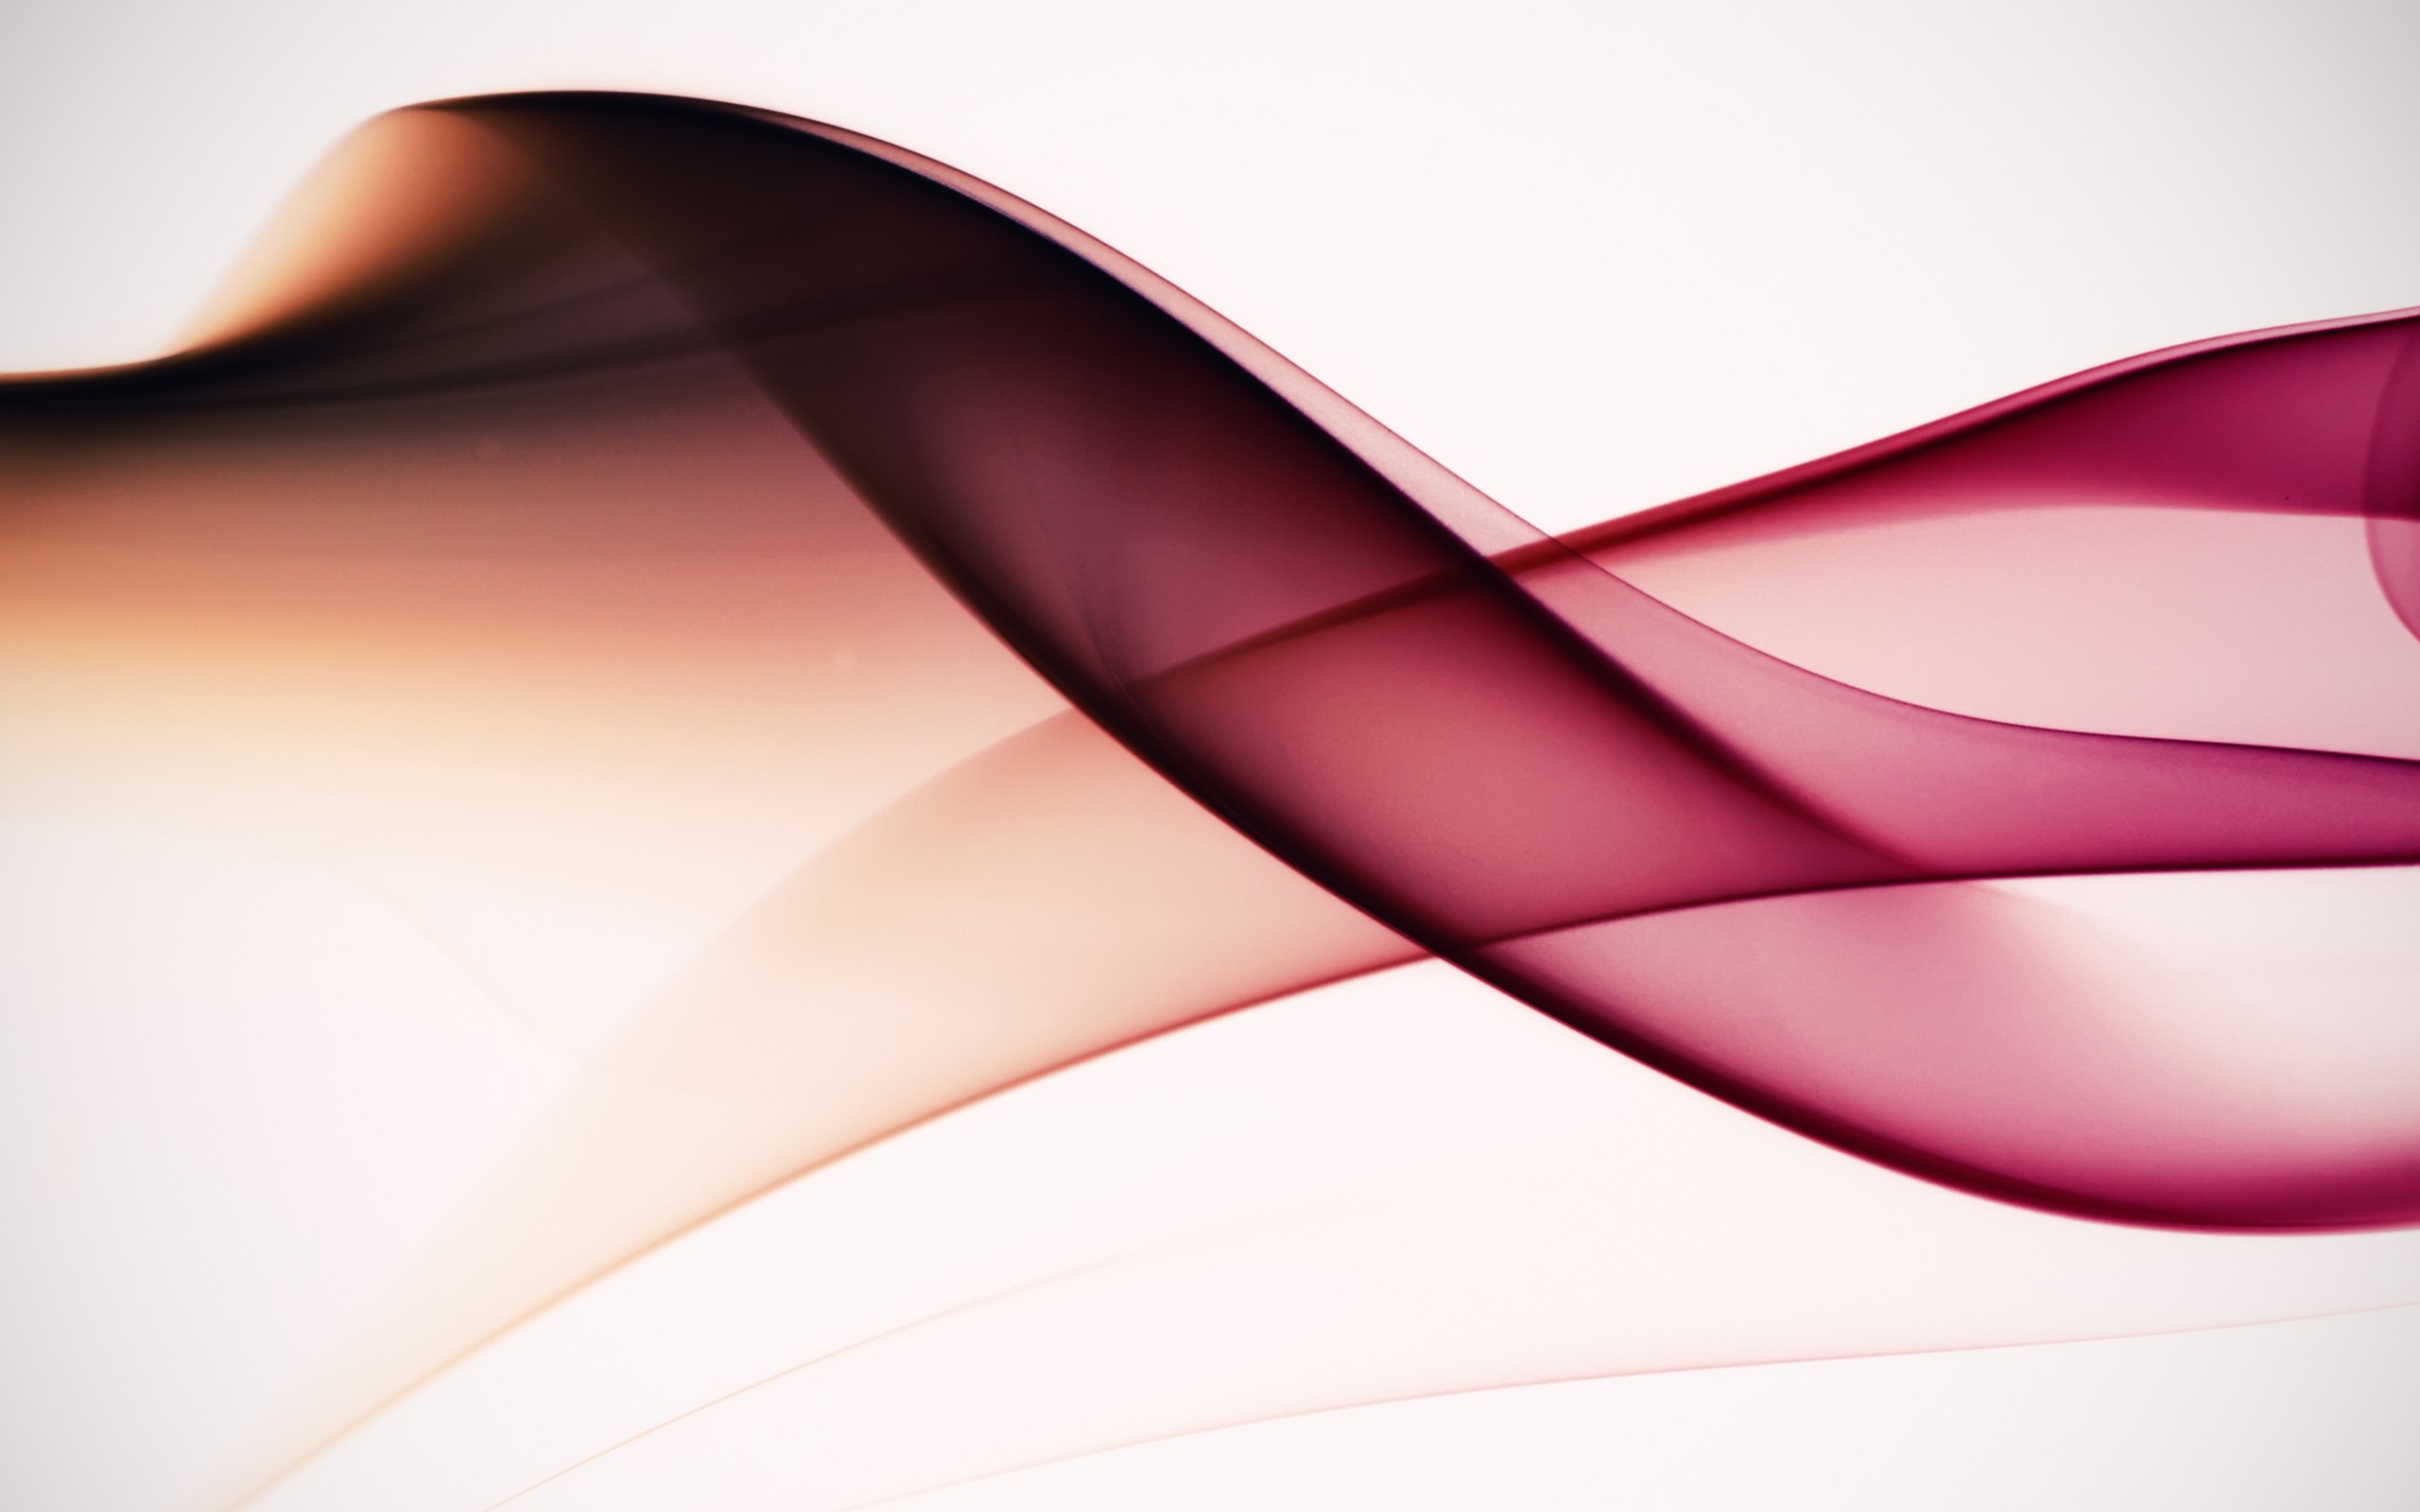 Beautiful Abstract White Pink Smoke HD Wallpaper Image For PC Desktop